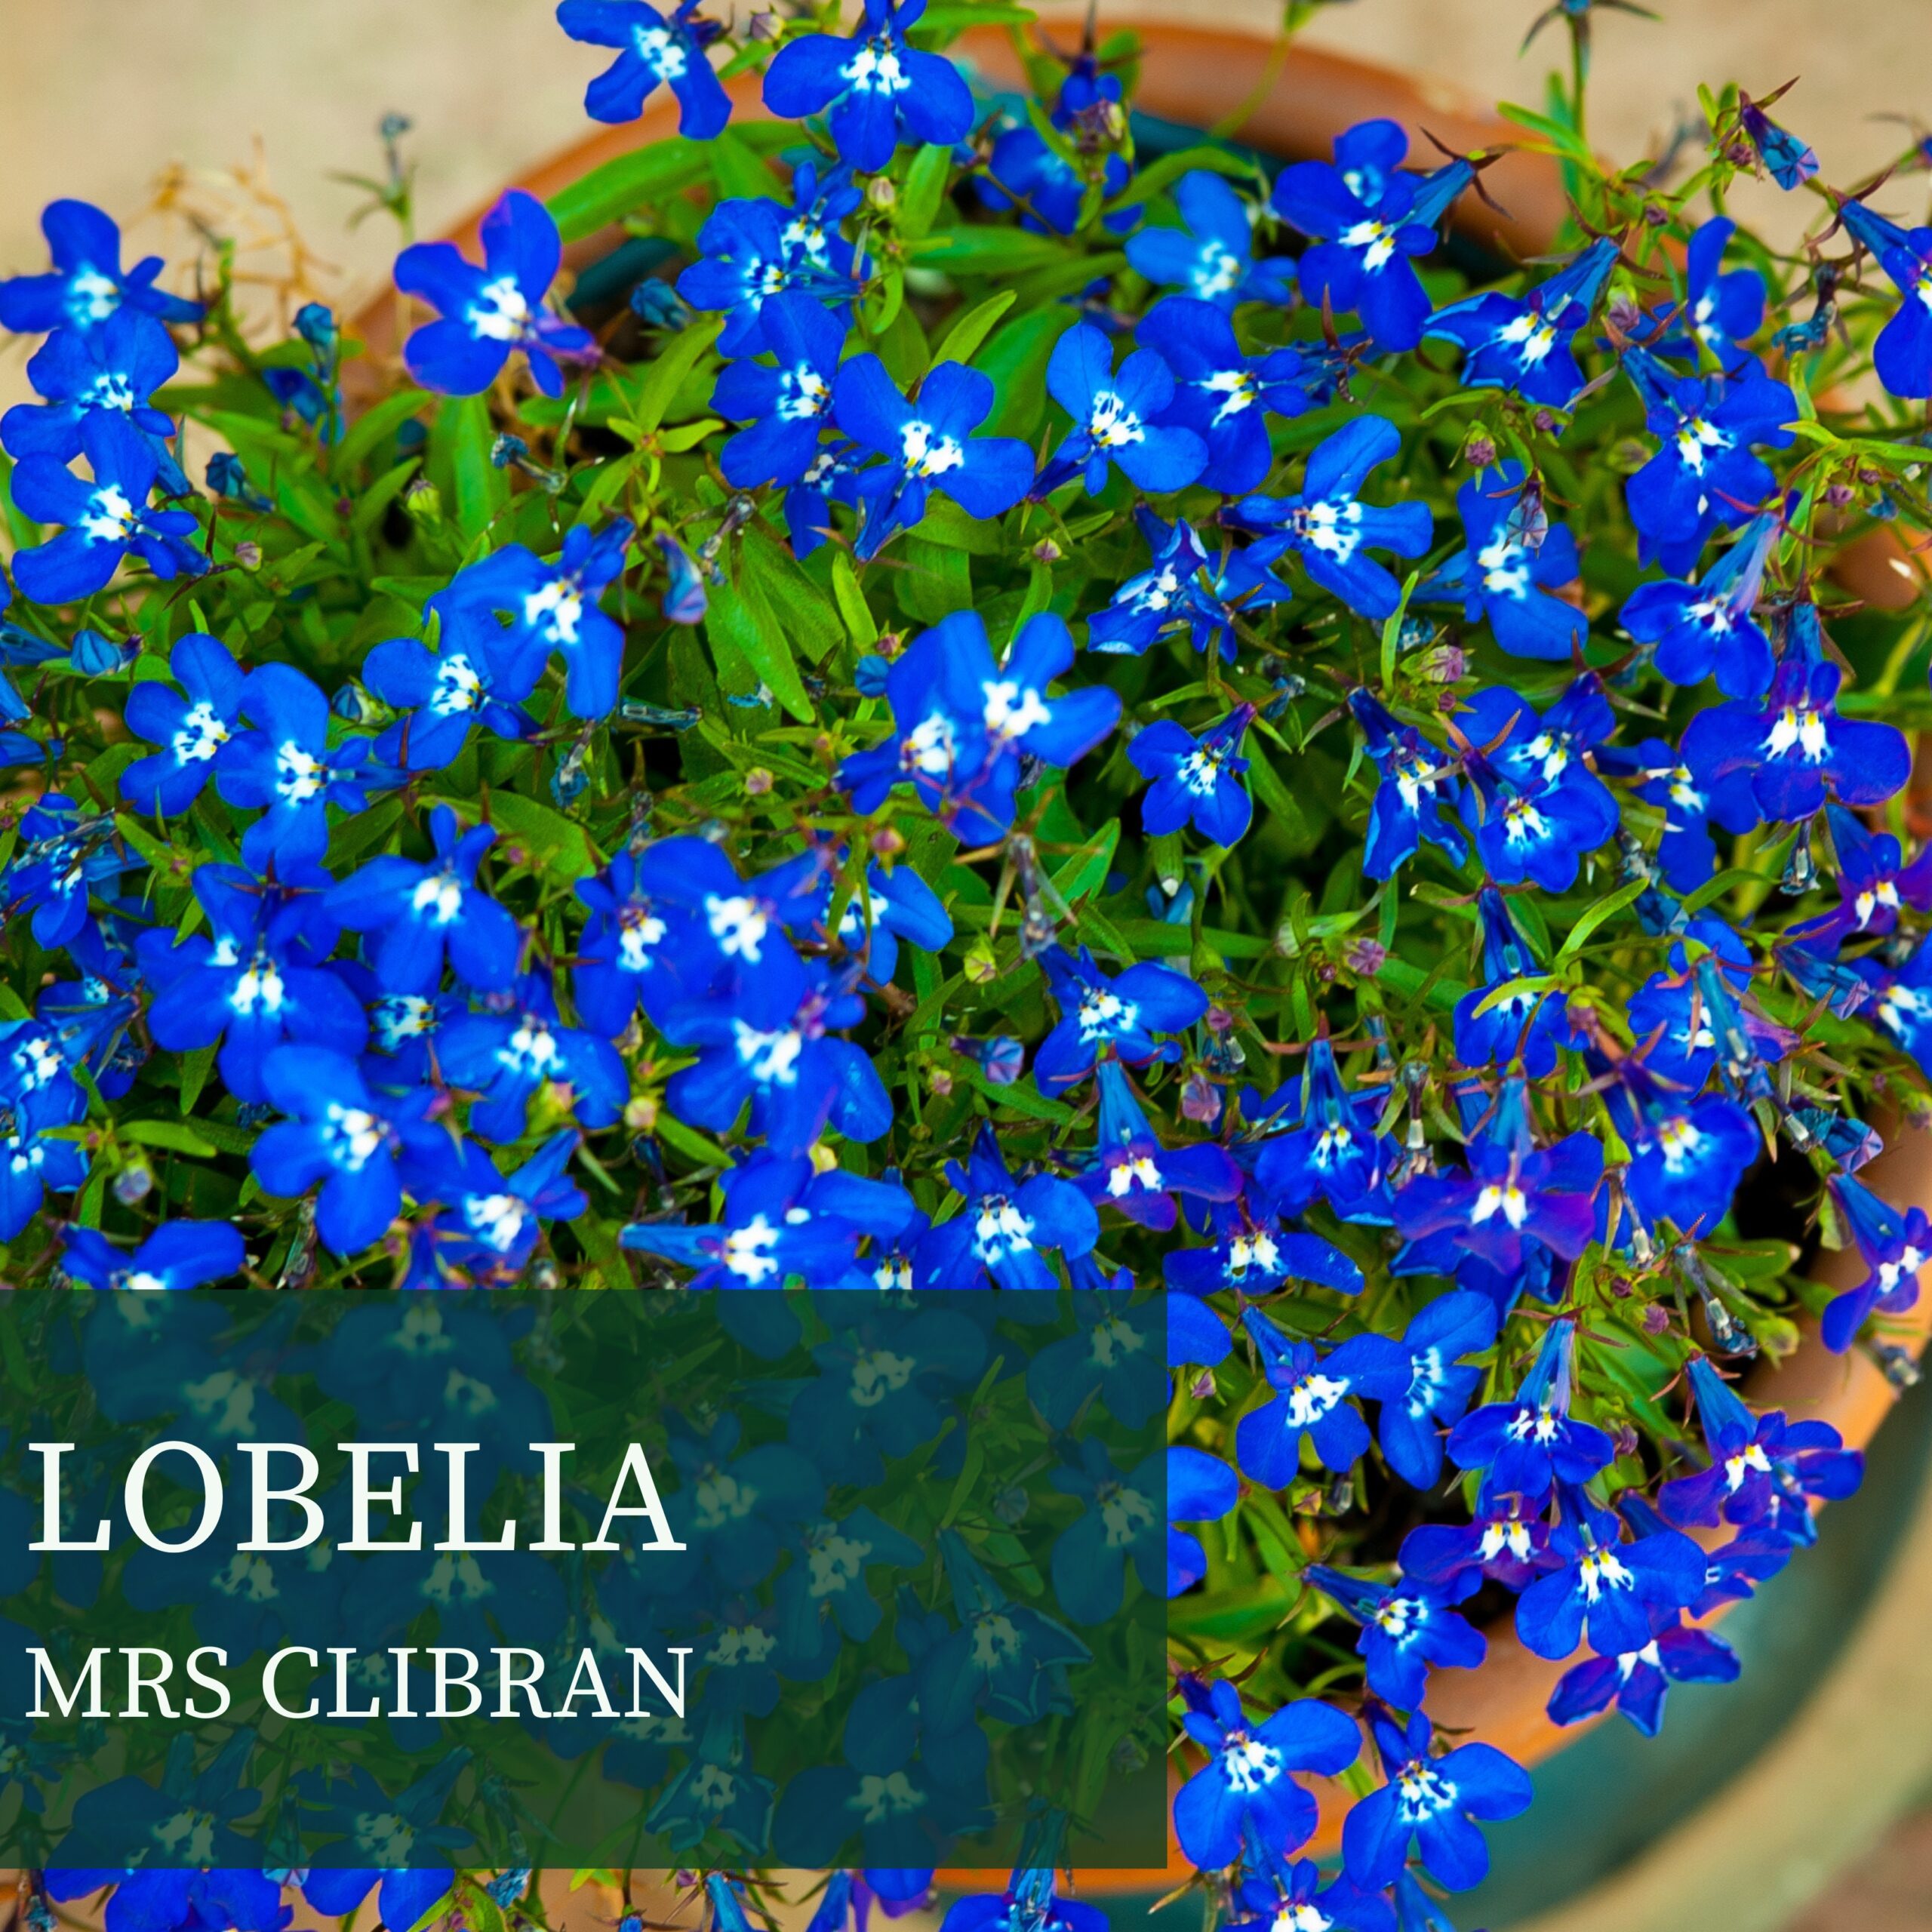 LOBELIA MRS CLIBRAN